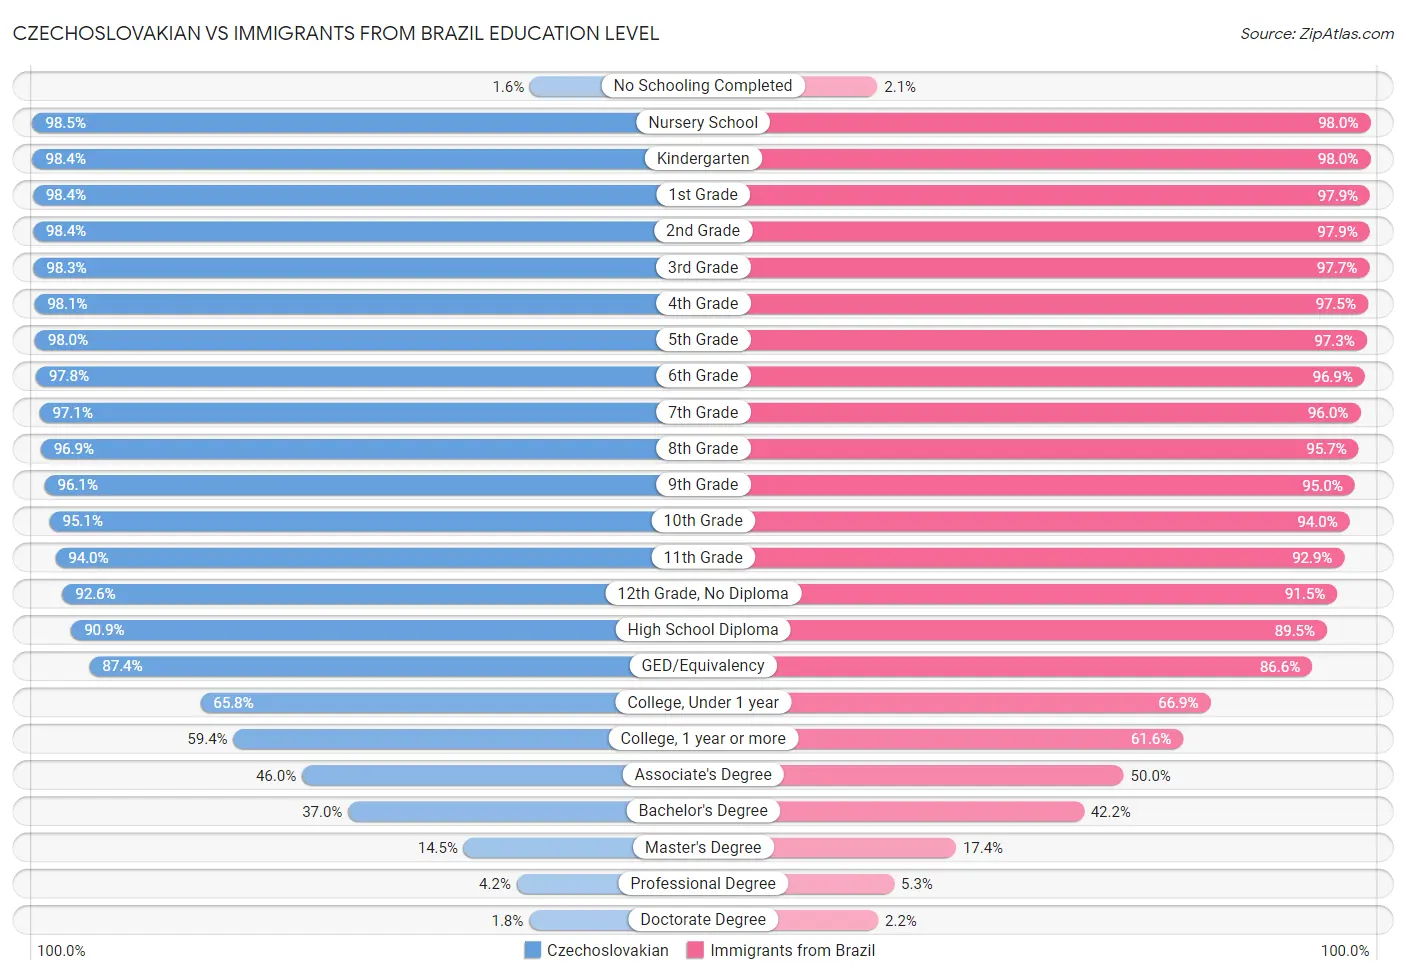 Czechoslovakian vs Immigrants from Brazil Education Level